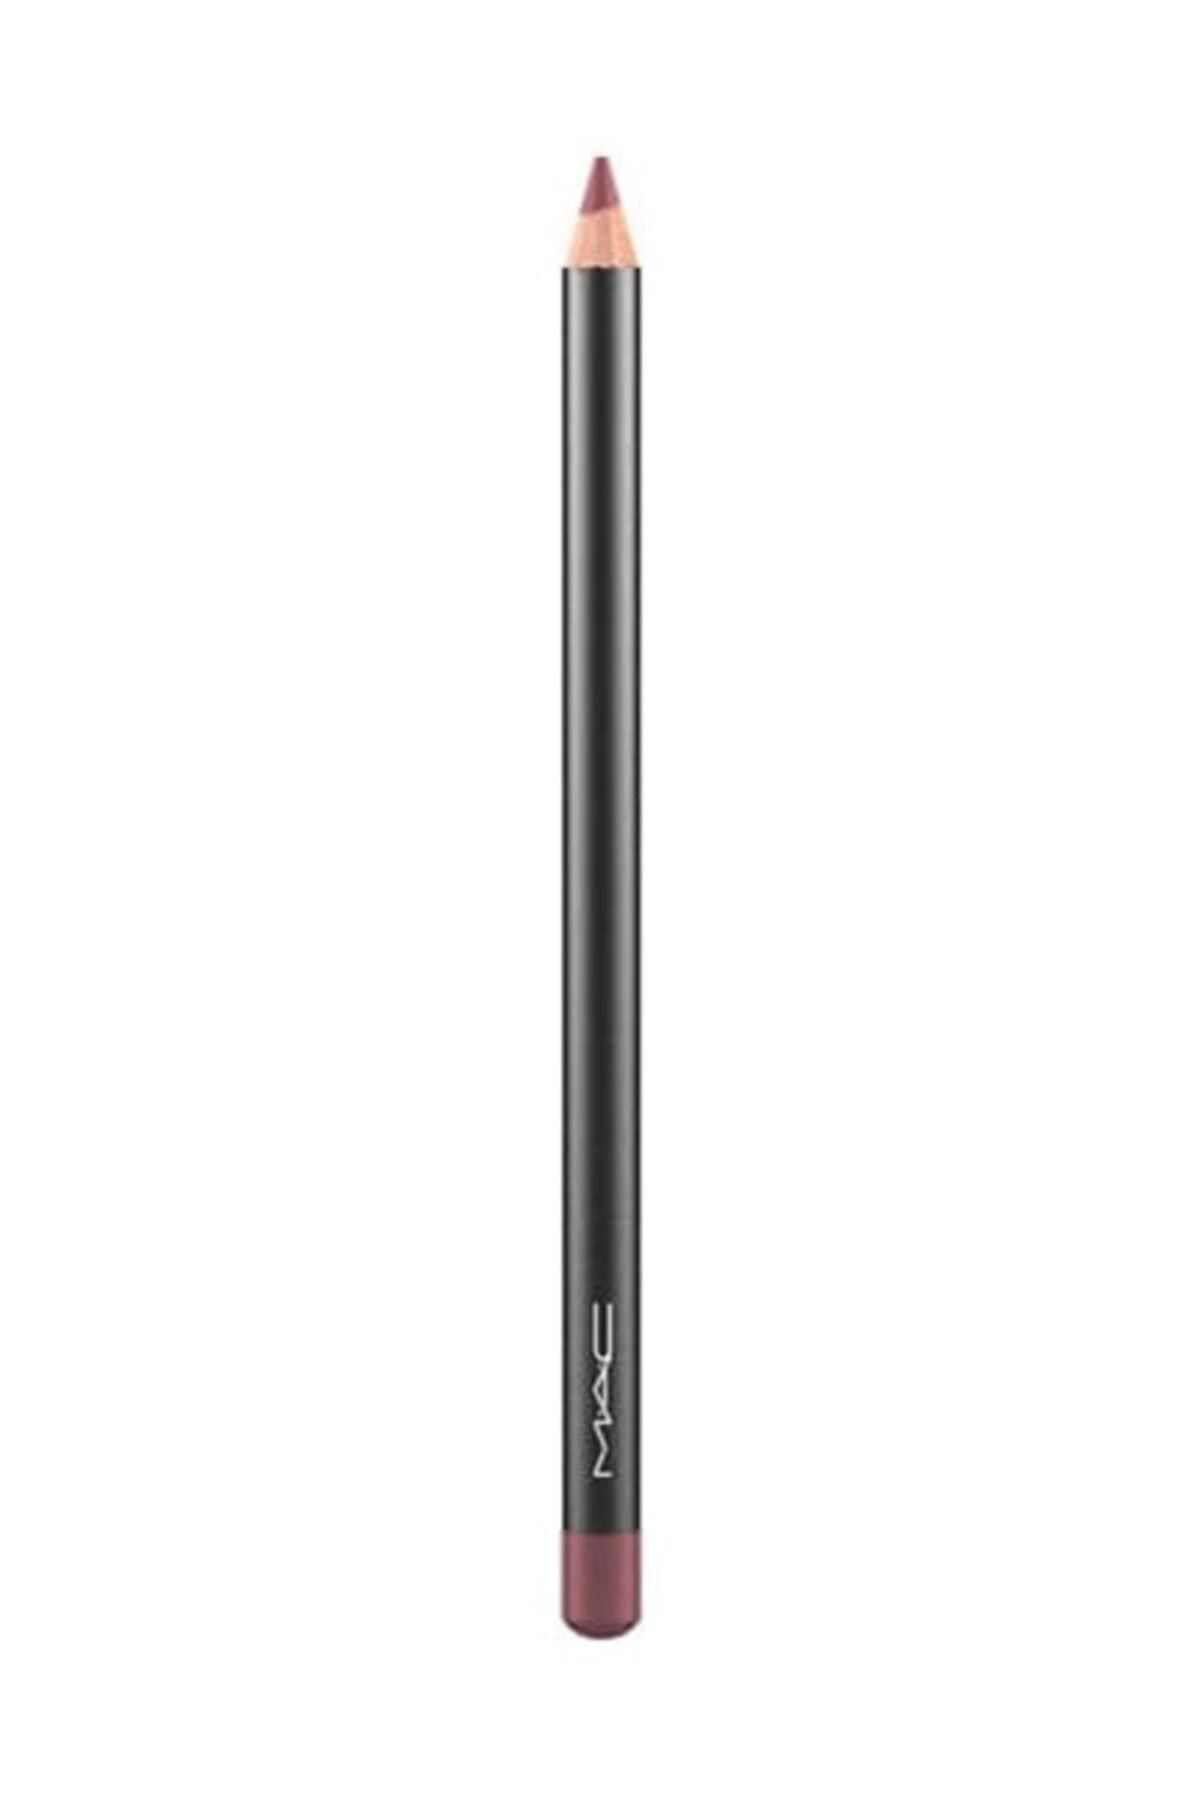 Mac Dudak Kalemi - Lip Pencil Plum 1.45 g 773602002139